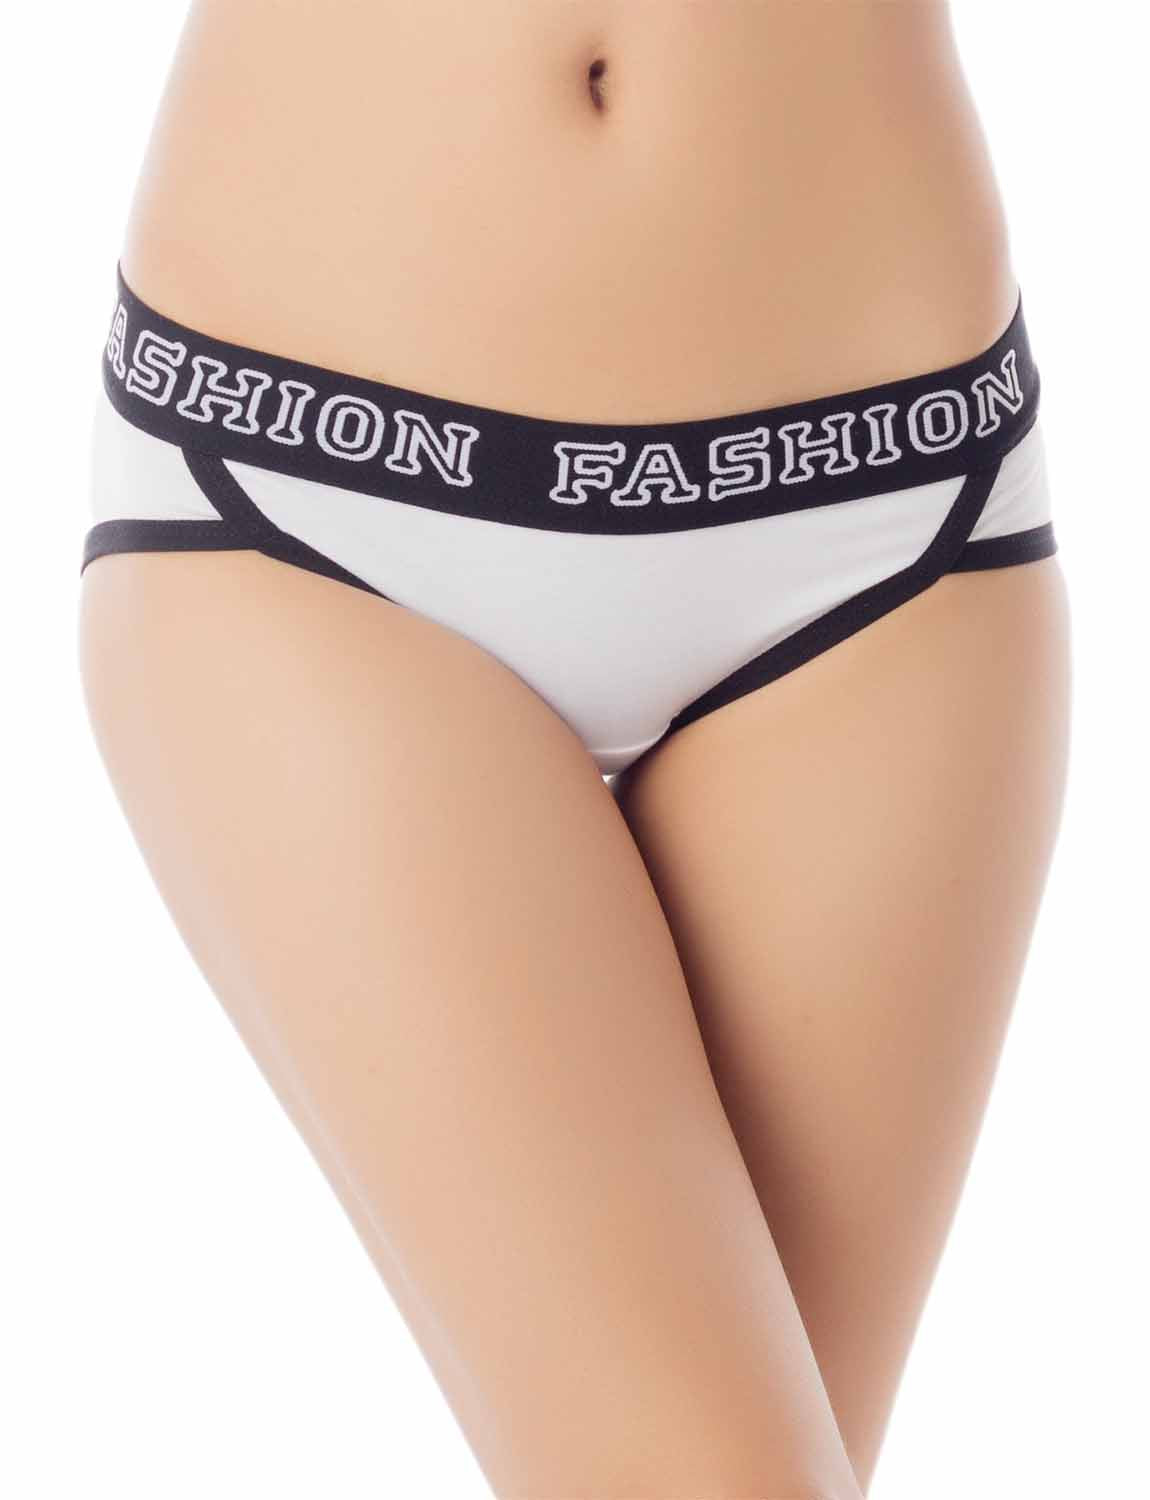 Women's Comfort Soft Cotton Sports Fashion Briefs Low Rise Hipster Panties